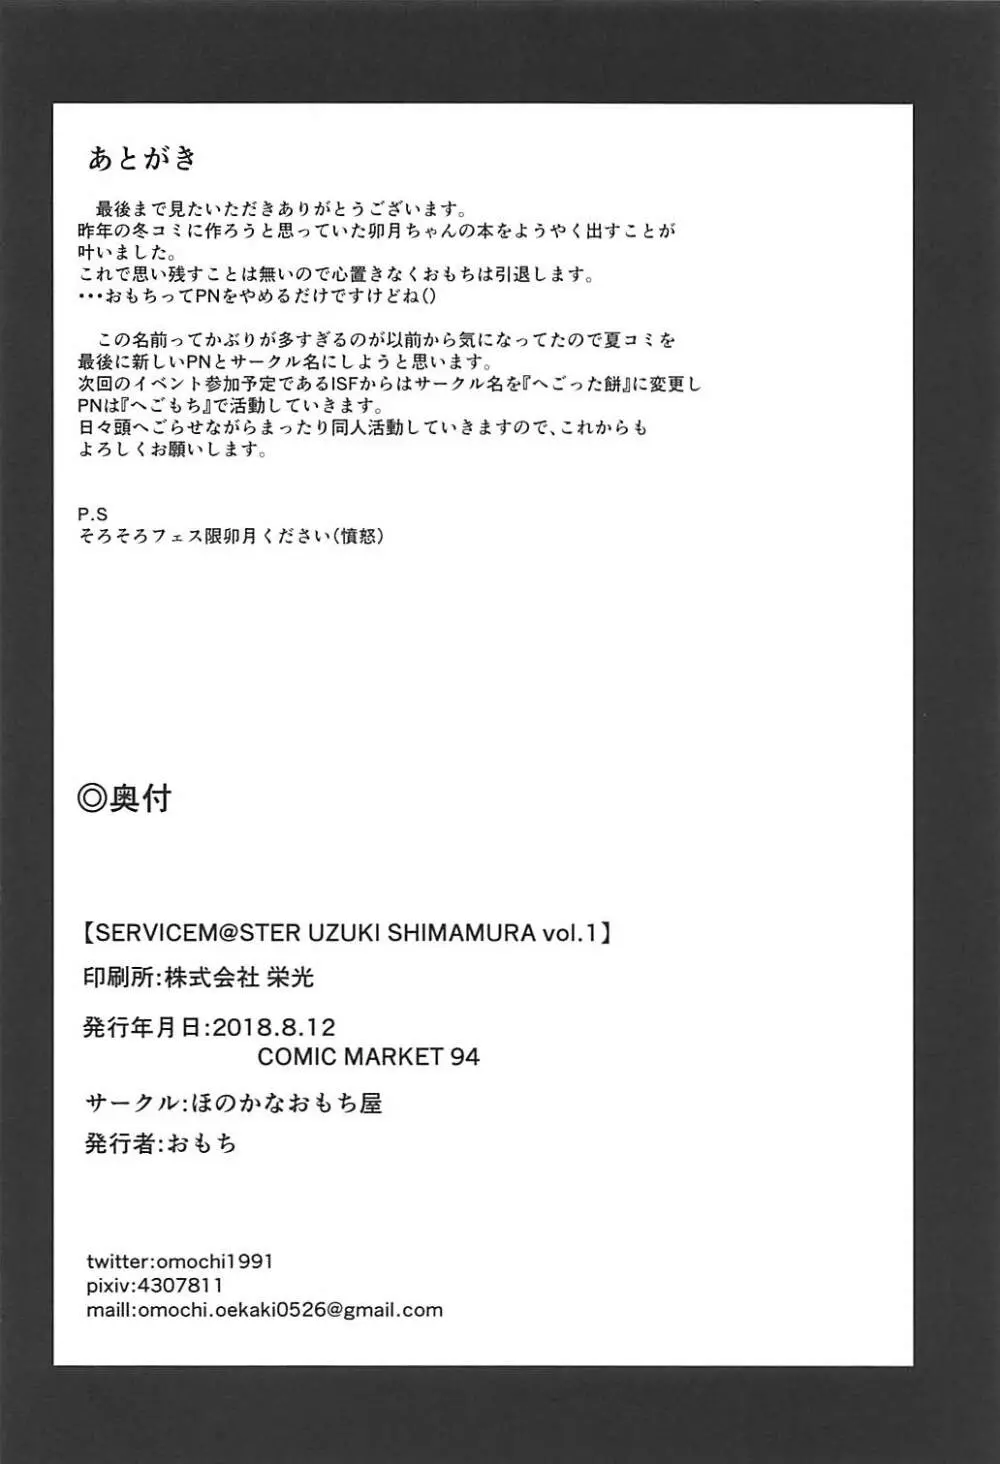 SERVICEM@STER UZUKI SHIMAMURA vol.1 21ページ